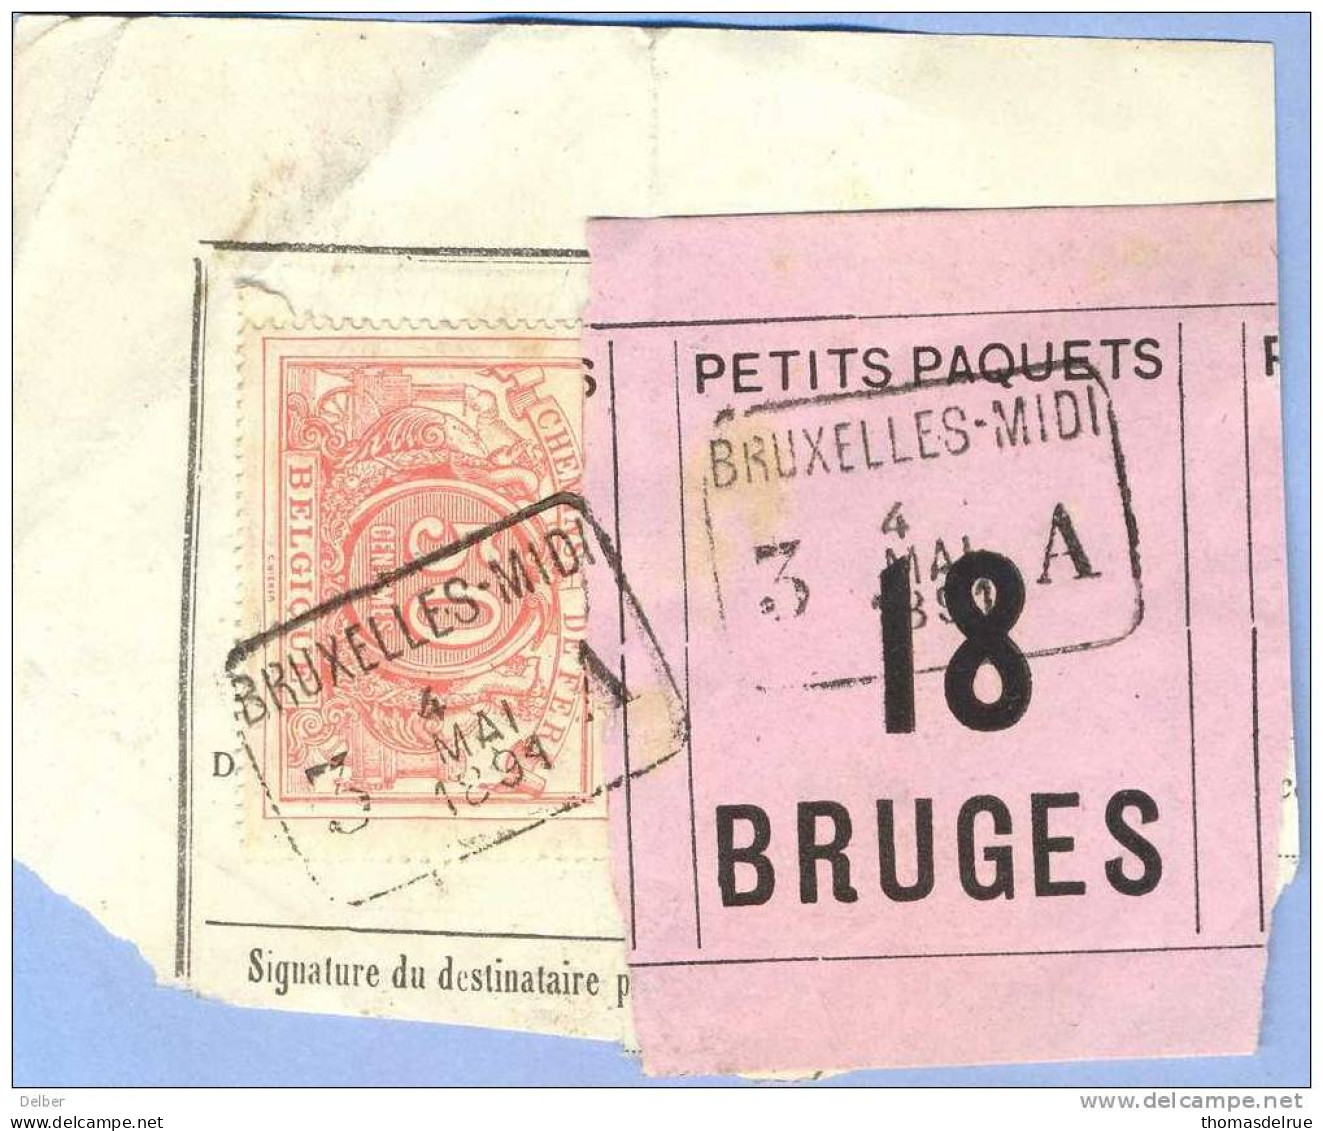 _V854: BRUXELLES-MIDI 3 __A  4 MAI 1891  >  BRUGES  - 3: Plat & Recht: SP11/ Fragment Met  " étiquette: PETITS PAQUETS:1 - Documents & Fragments